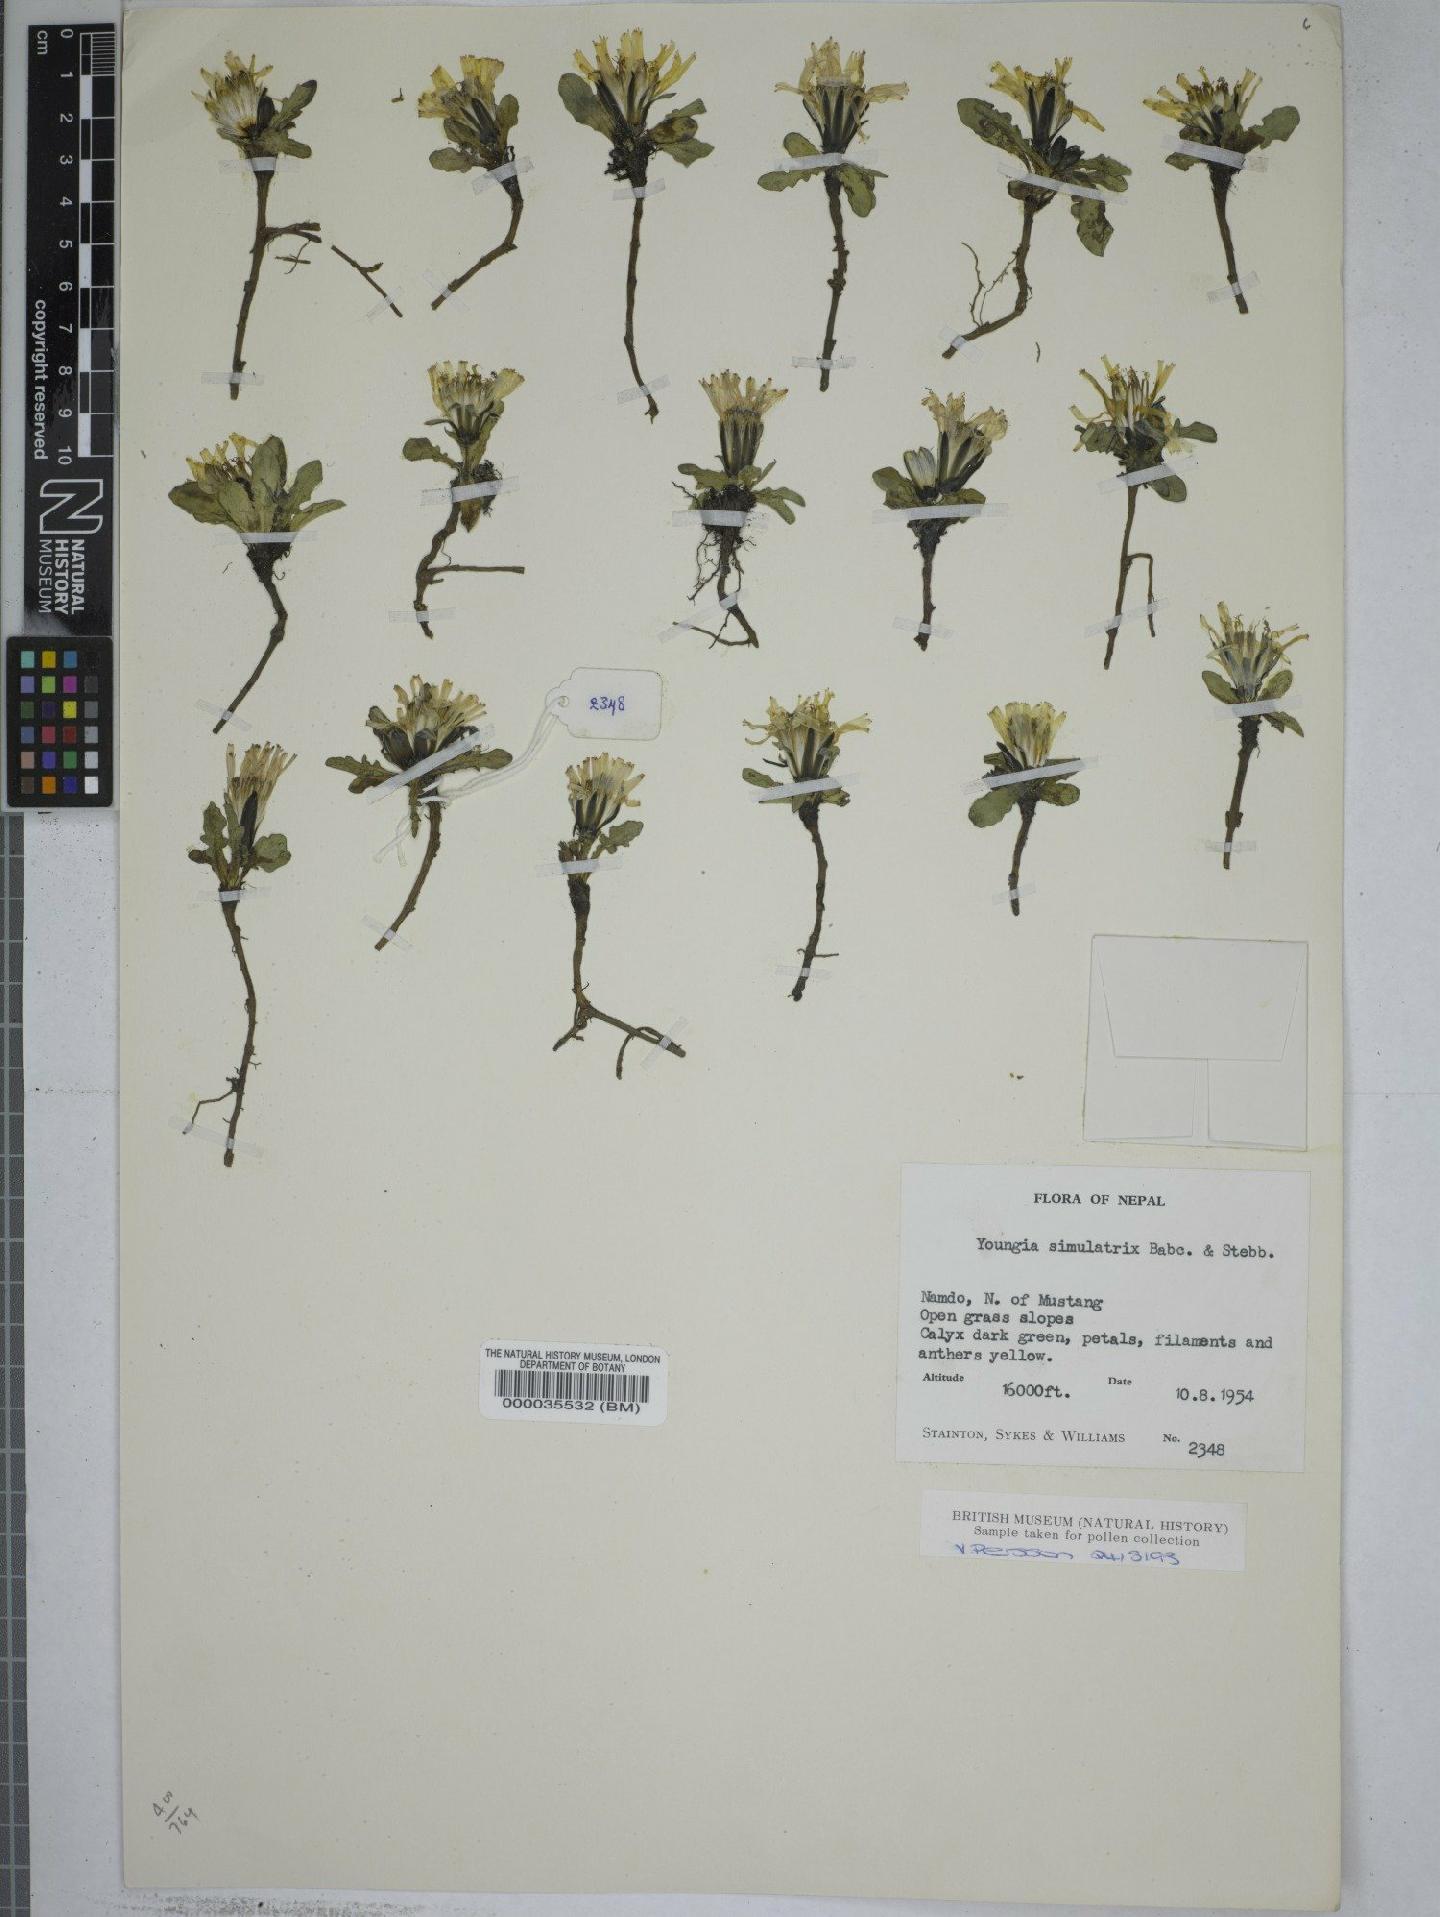 To NHMUK collection (Youngia simulatrix (Babc.) Babc. & Stebb.; NHMUK:ecatalogue:9149130)